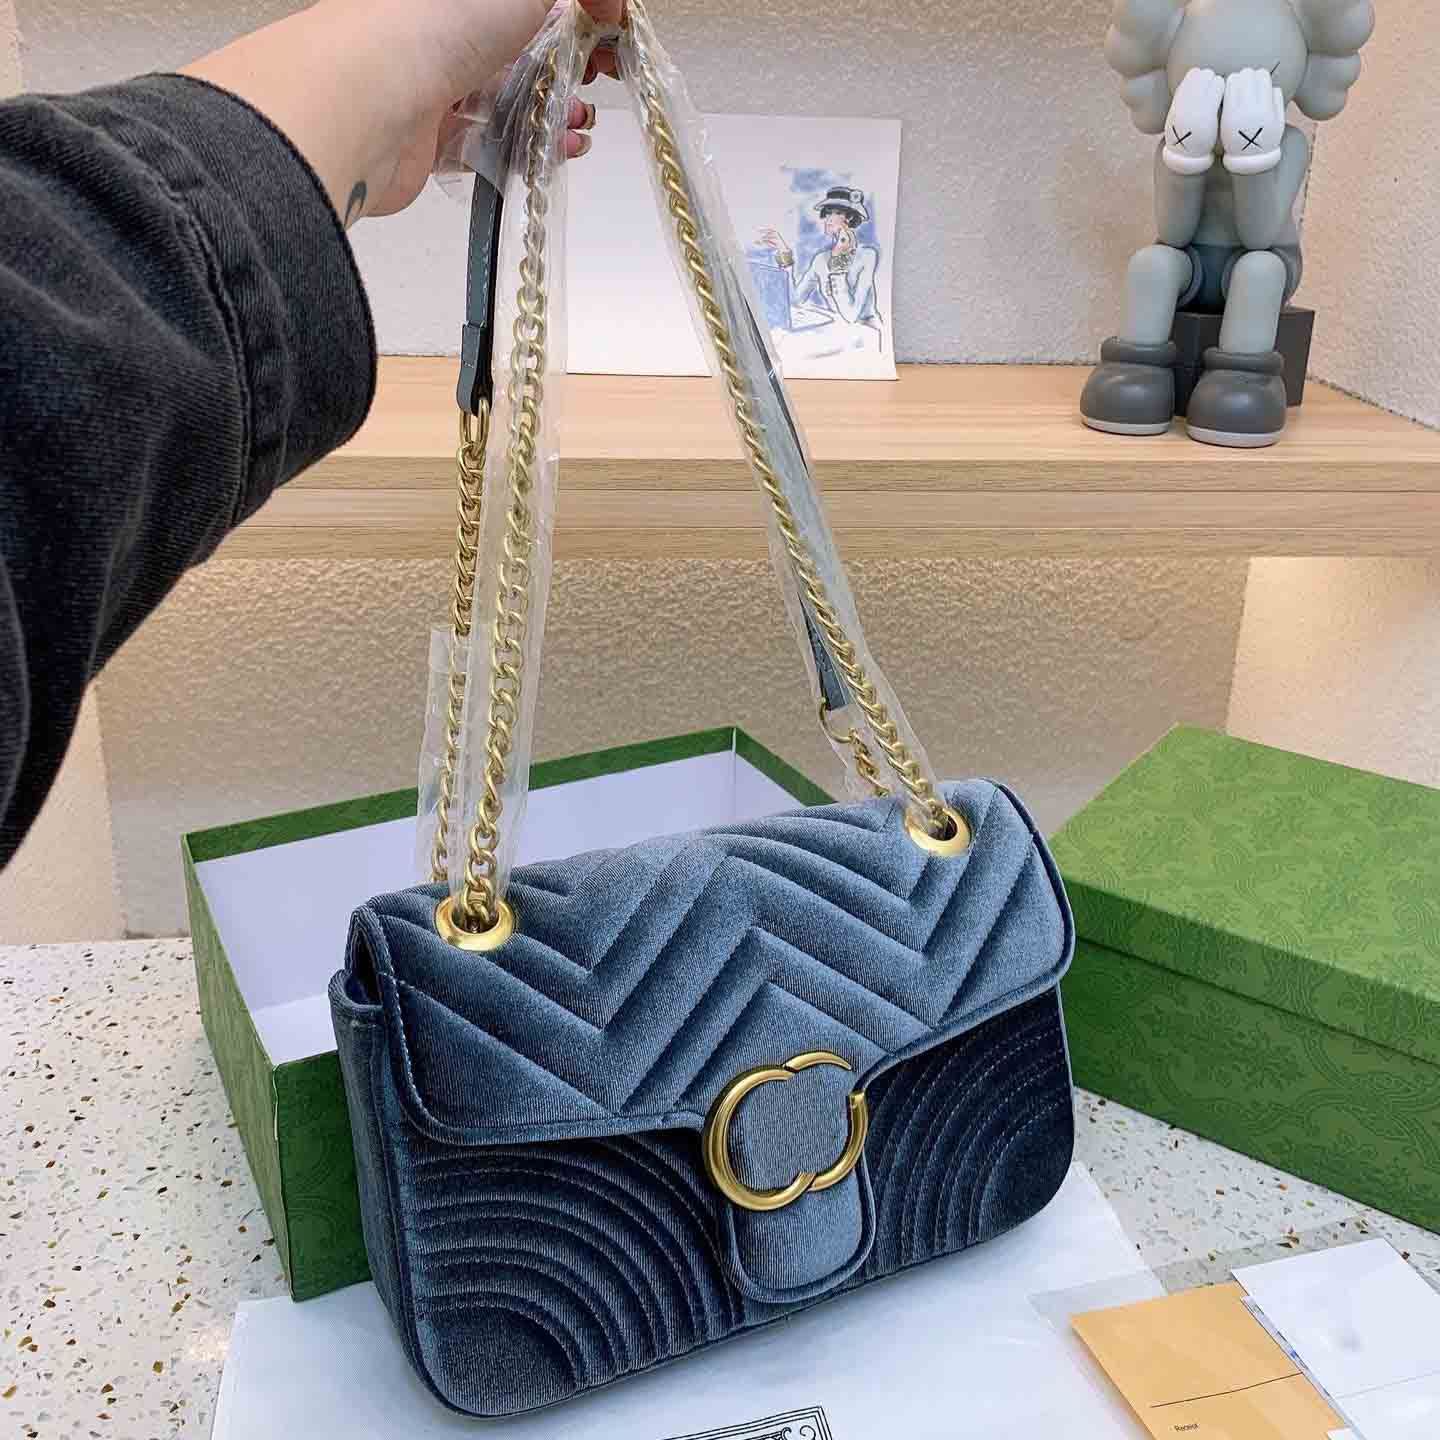 Designer Knockoff Luxury Brand Handbags, Ladies Shoulder Bag